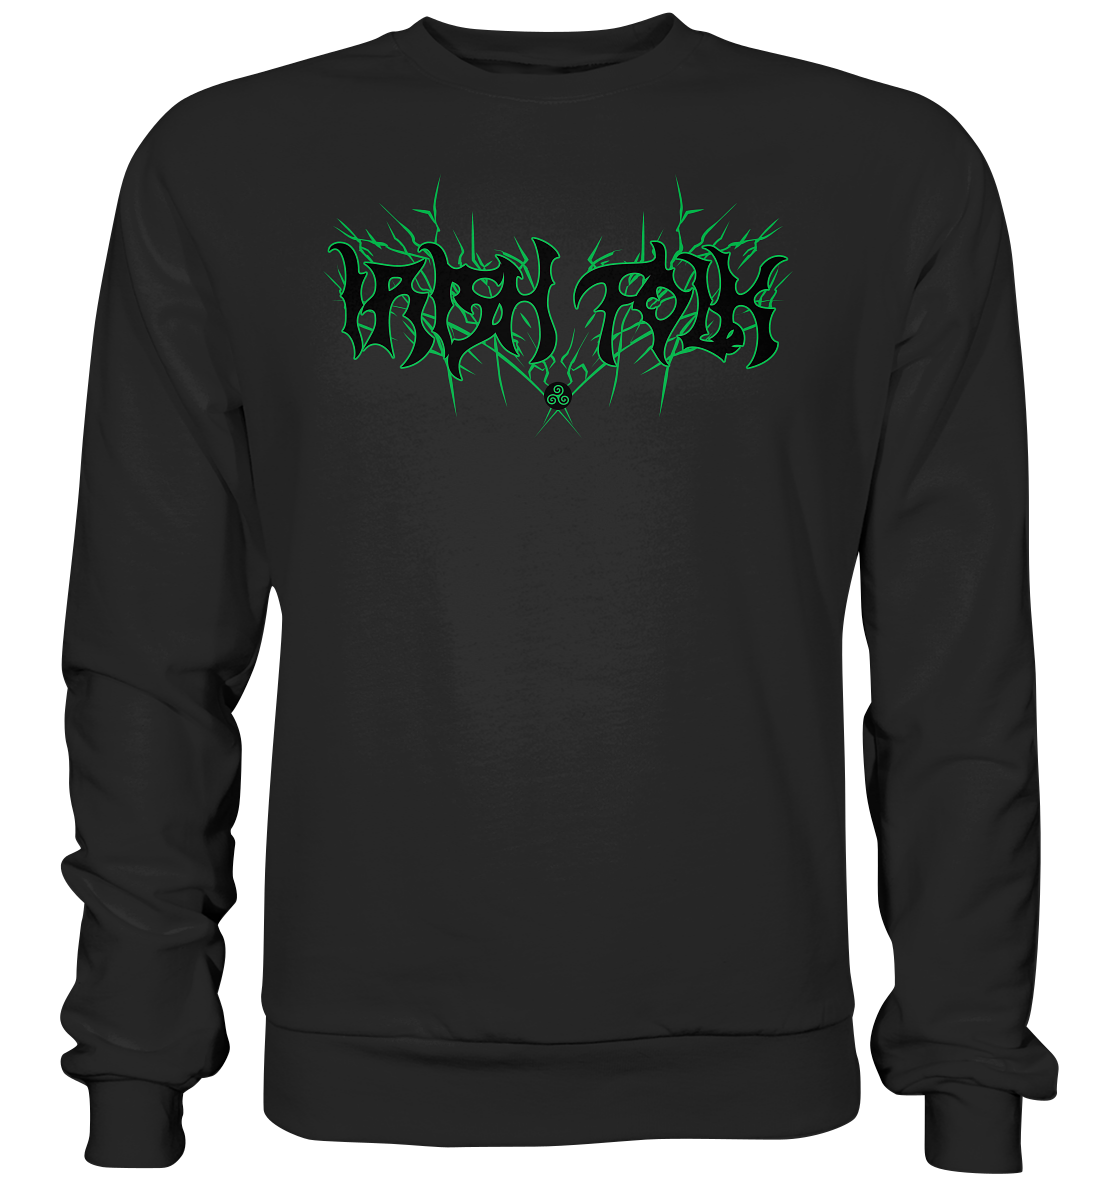 Irish Folk "Metal Band" - Premium Sweatshirt